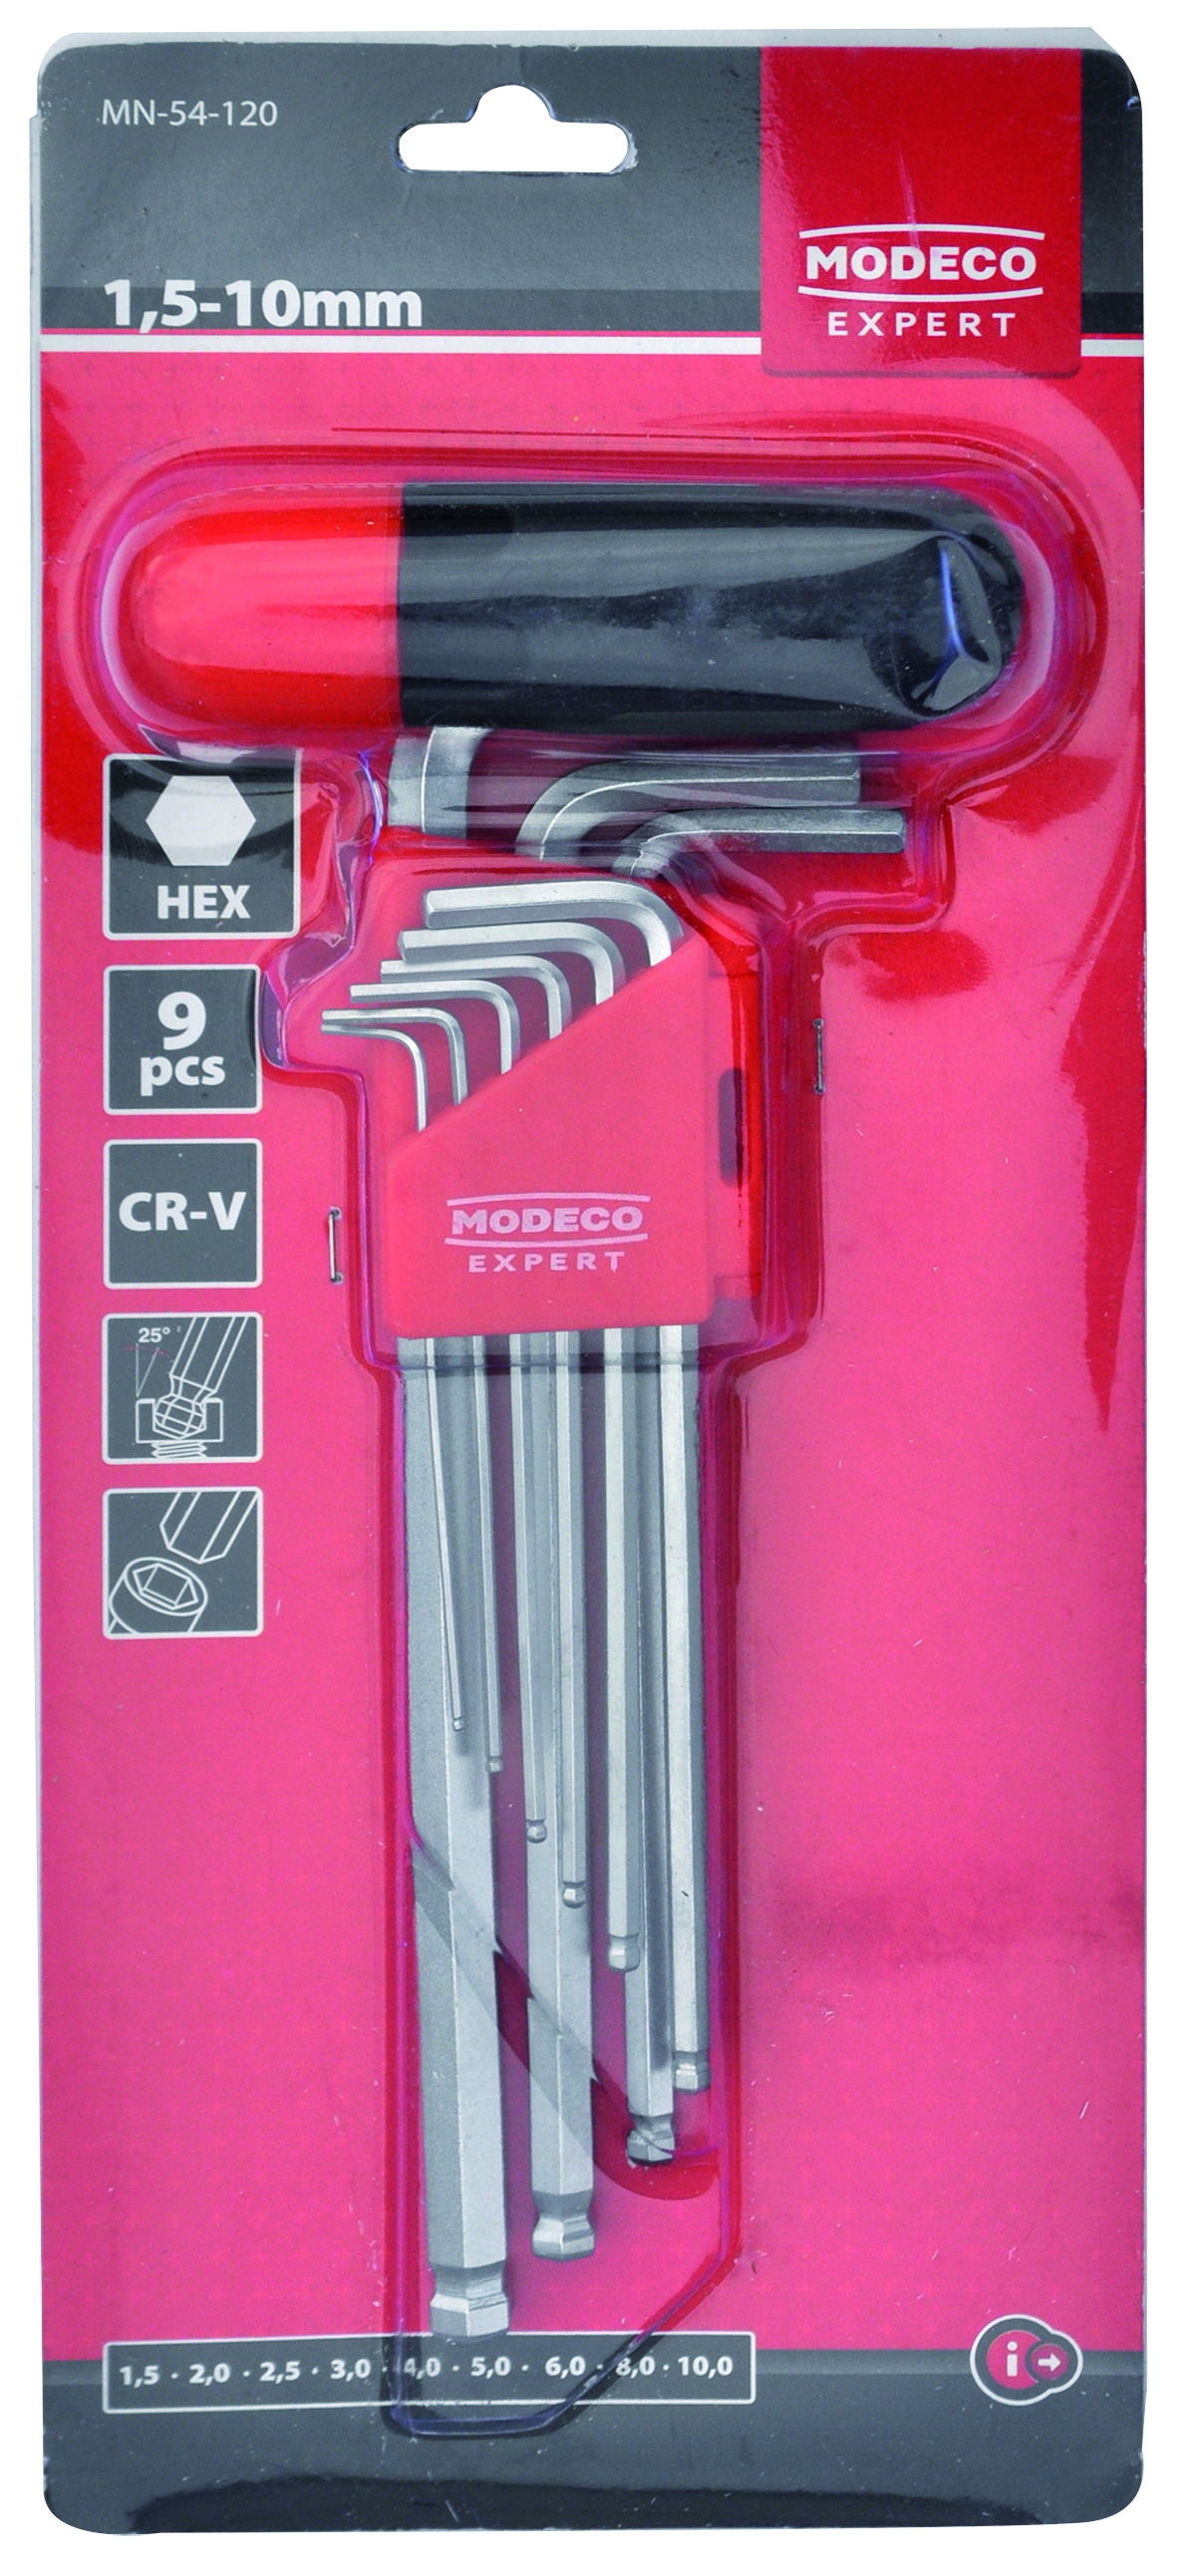 MN-54-12  HEX Hex key set 9 pcs